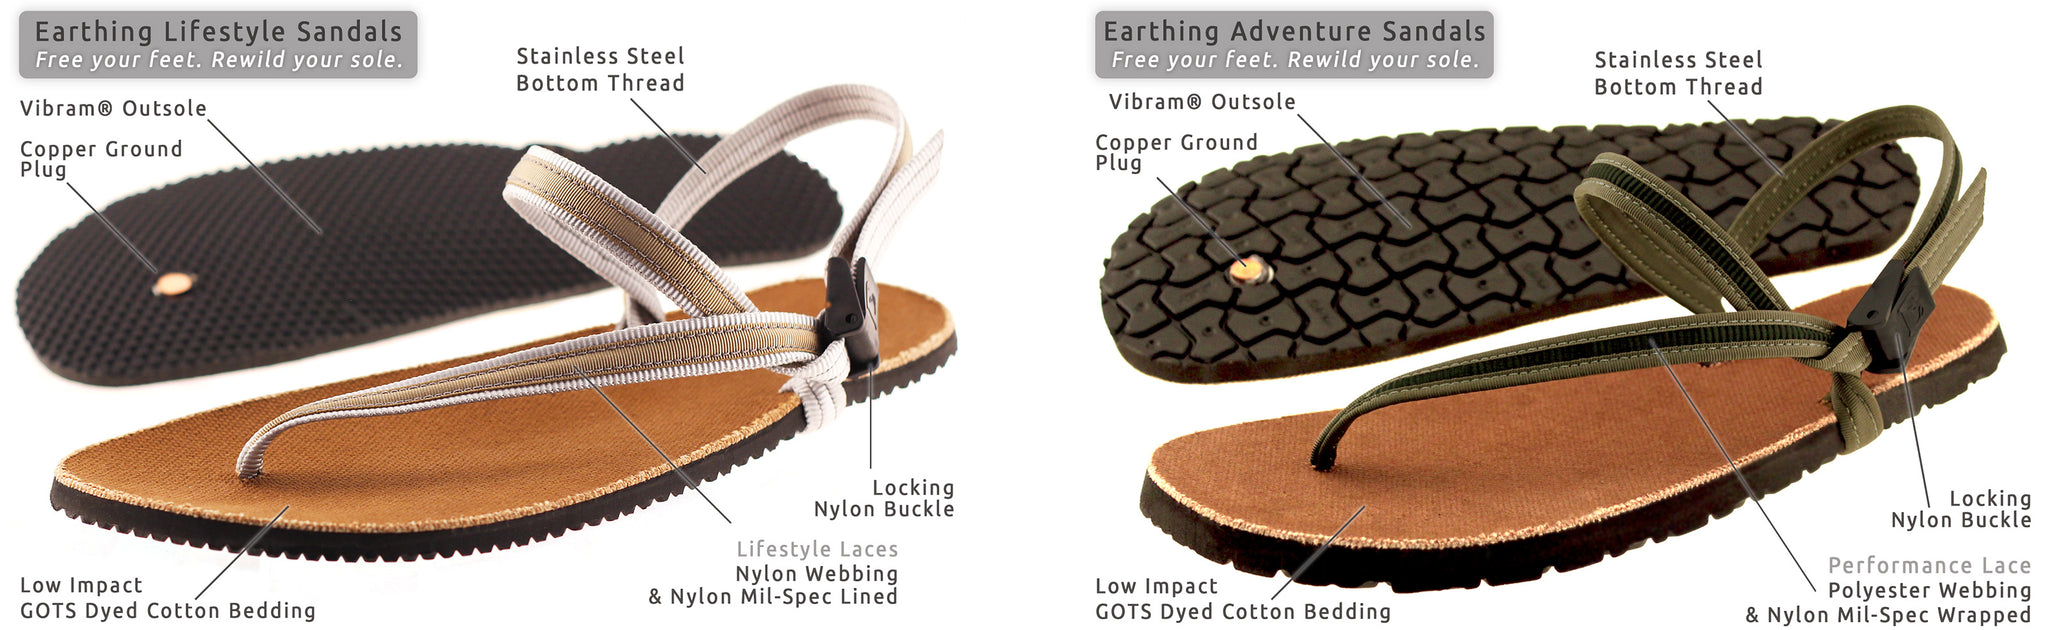 lifestyle adventure minimalist grounding sandal comparison